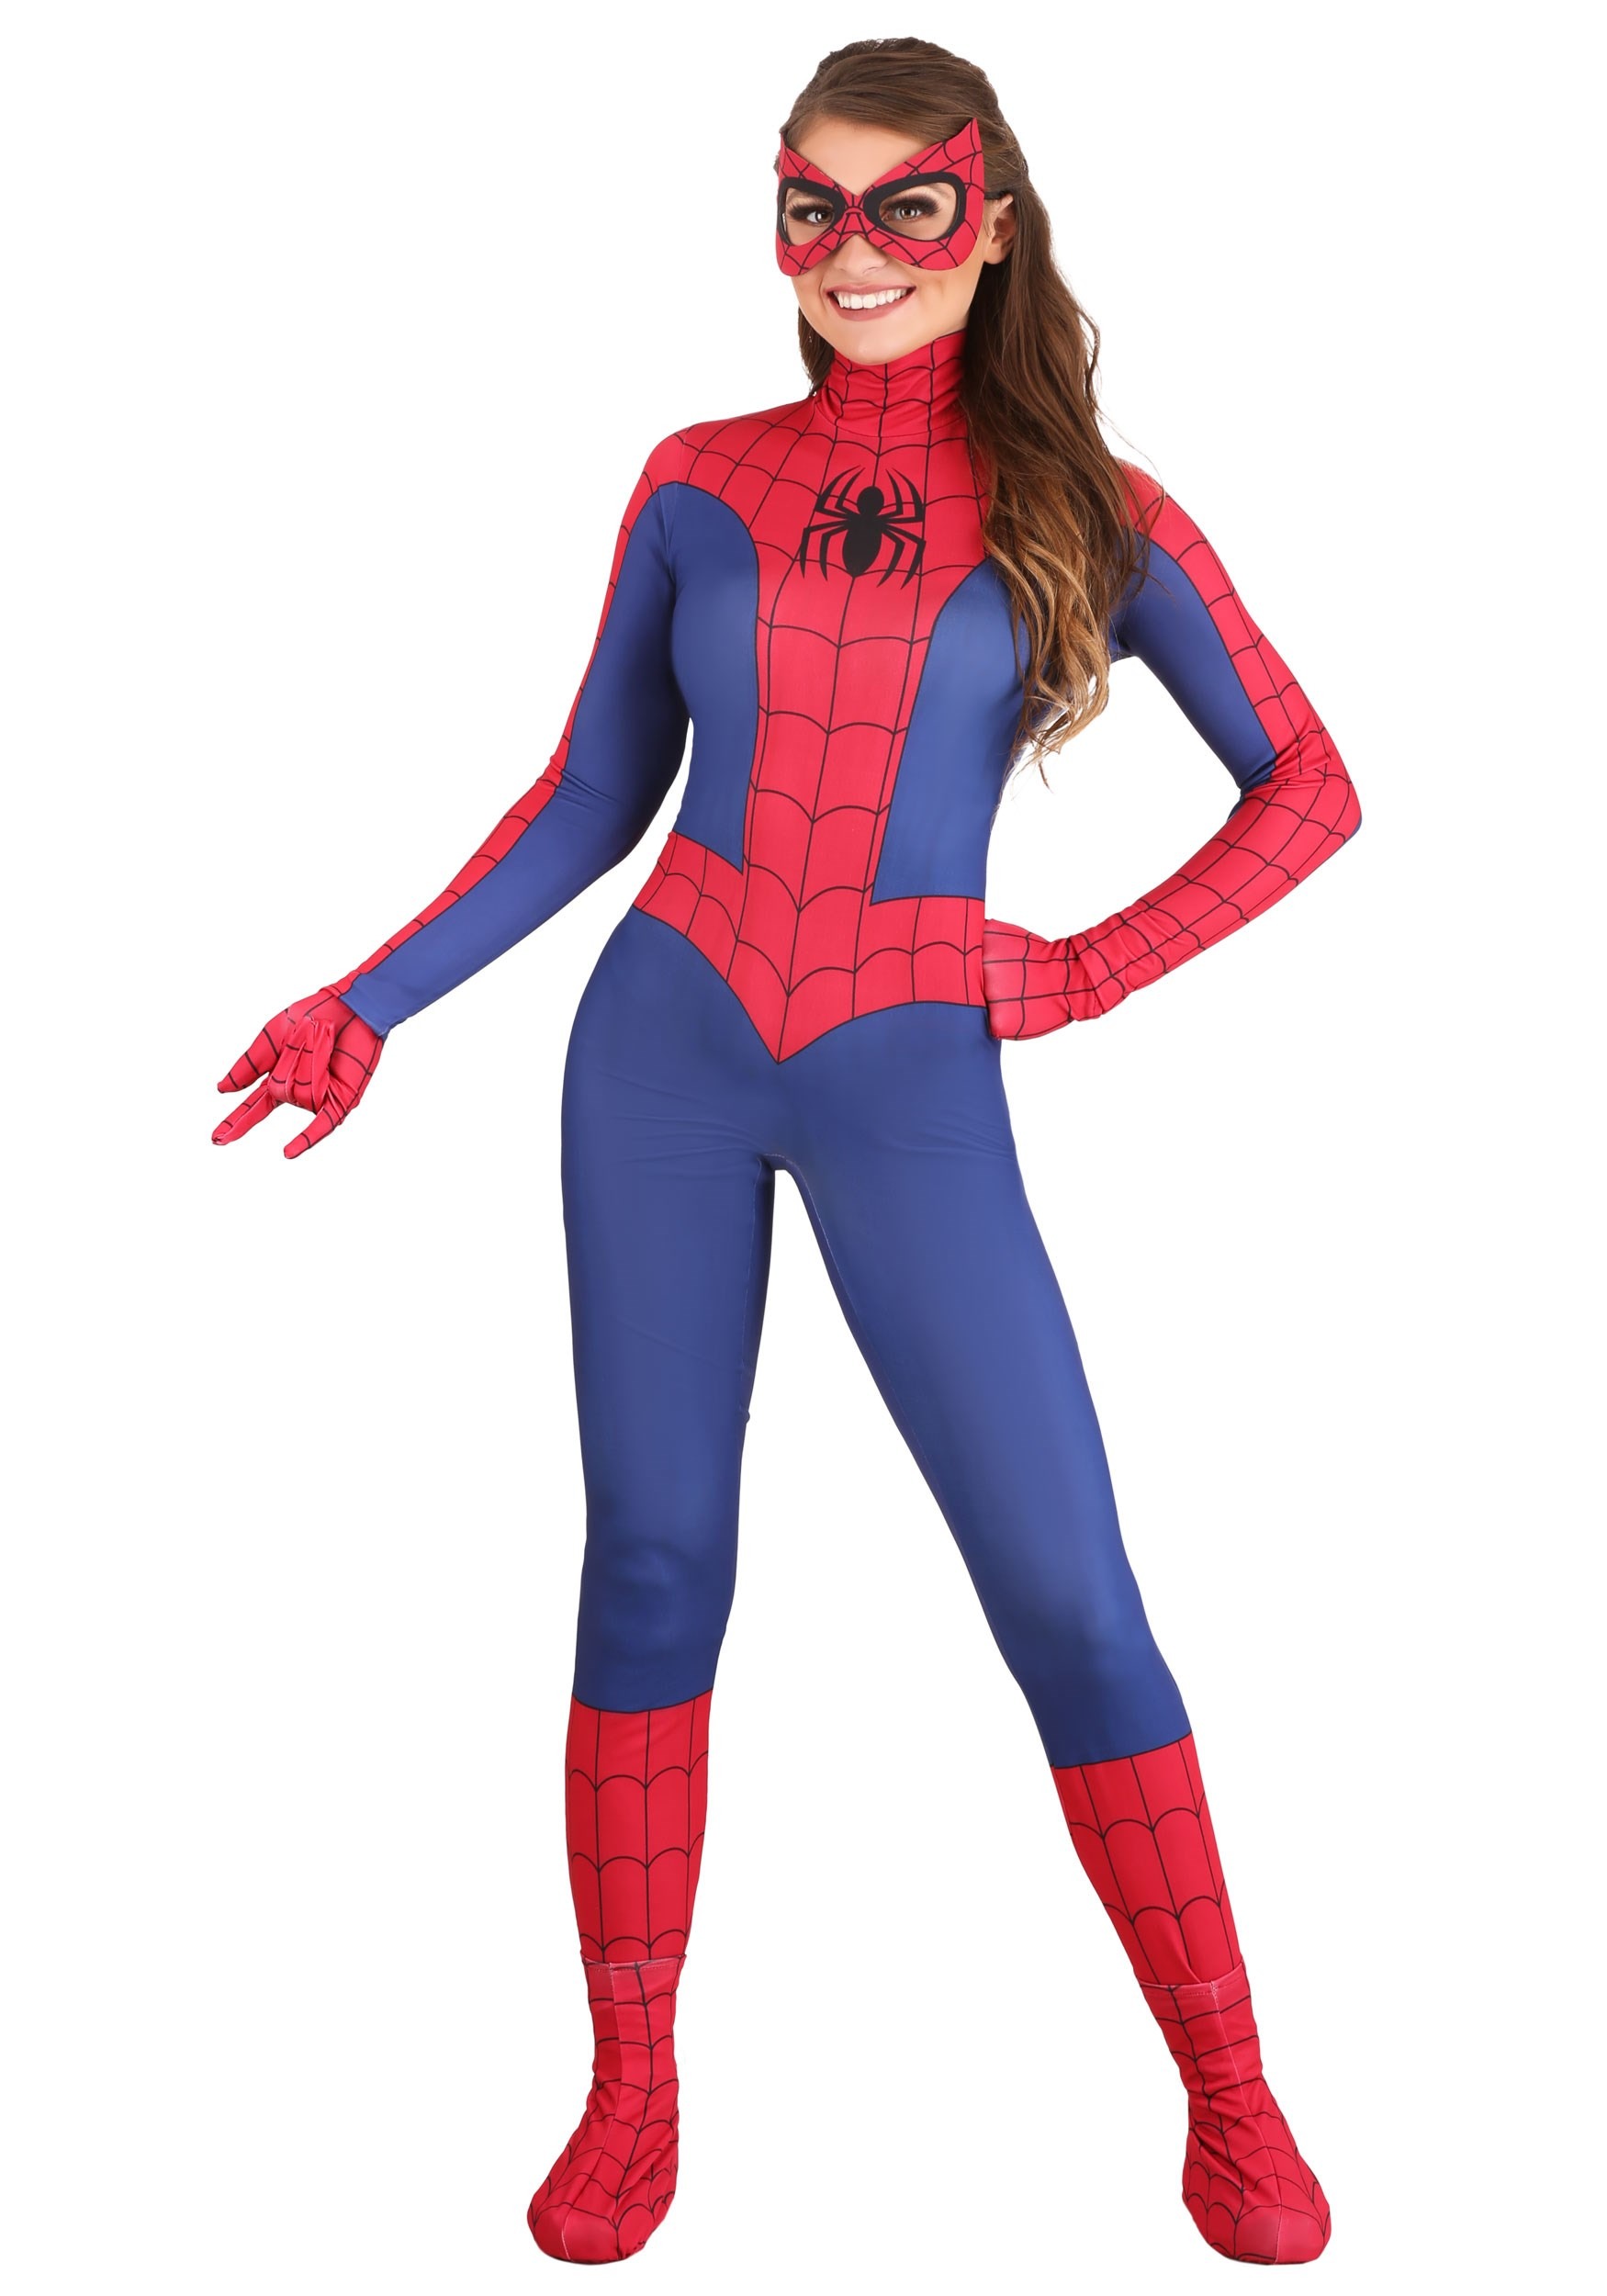 Spider-Man Costume news.donnu.ru